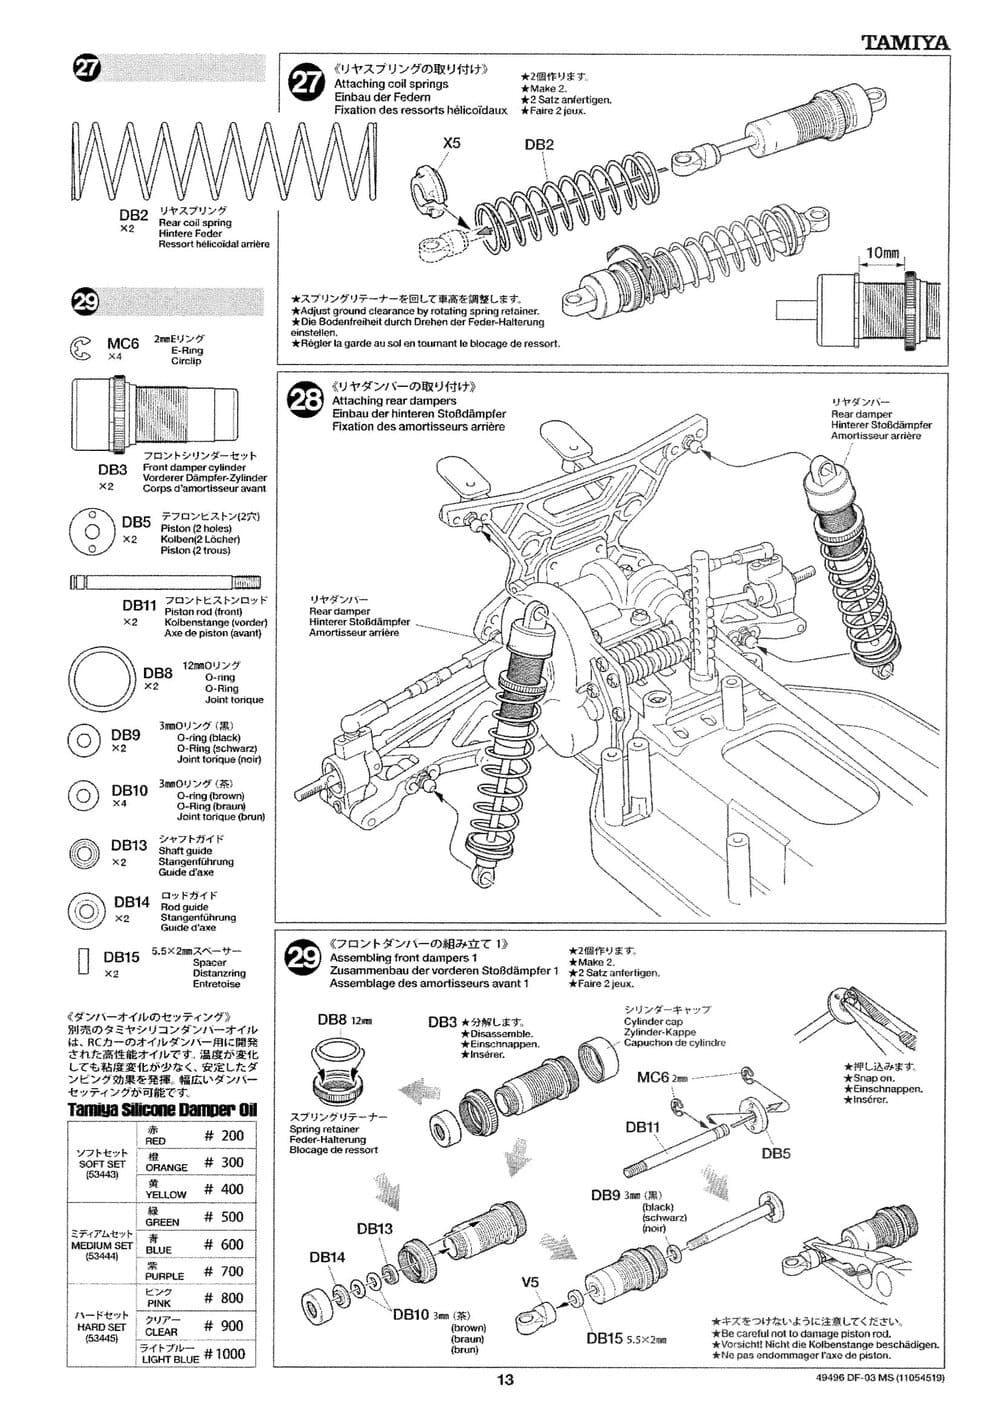 Tamiya - DF-03 MS Chassis Chassis - Manual - Page 13